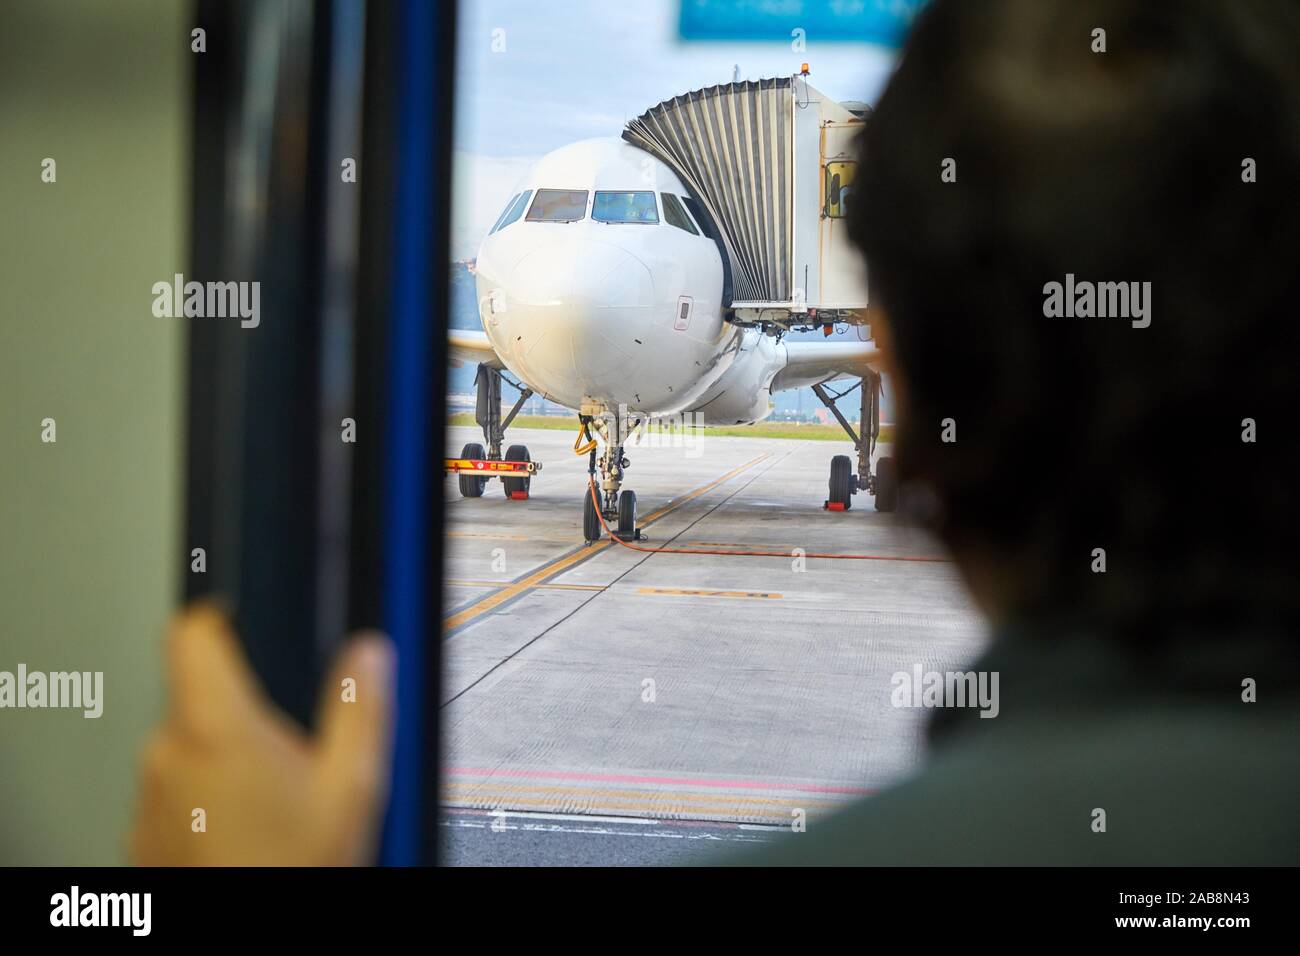 Passenger and plane, Bilbao Airport, Loiu, Bizkaia, Basque Country, Spain Stock Photo